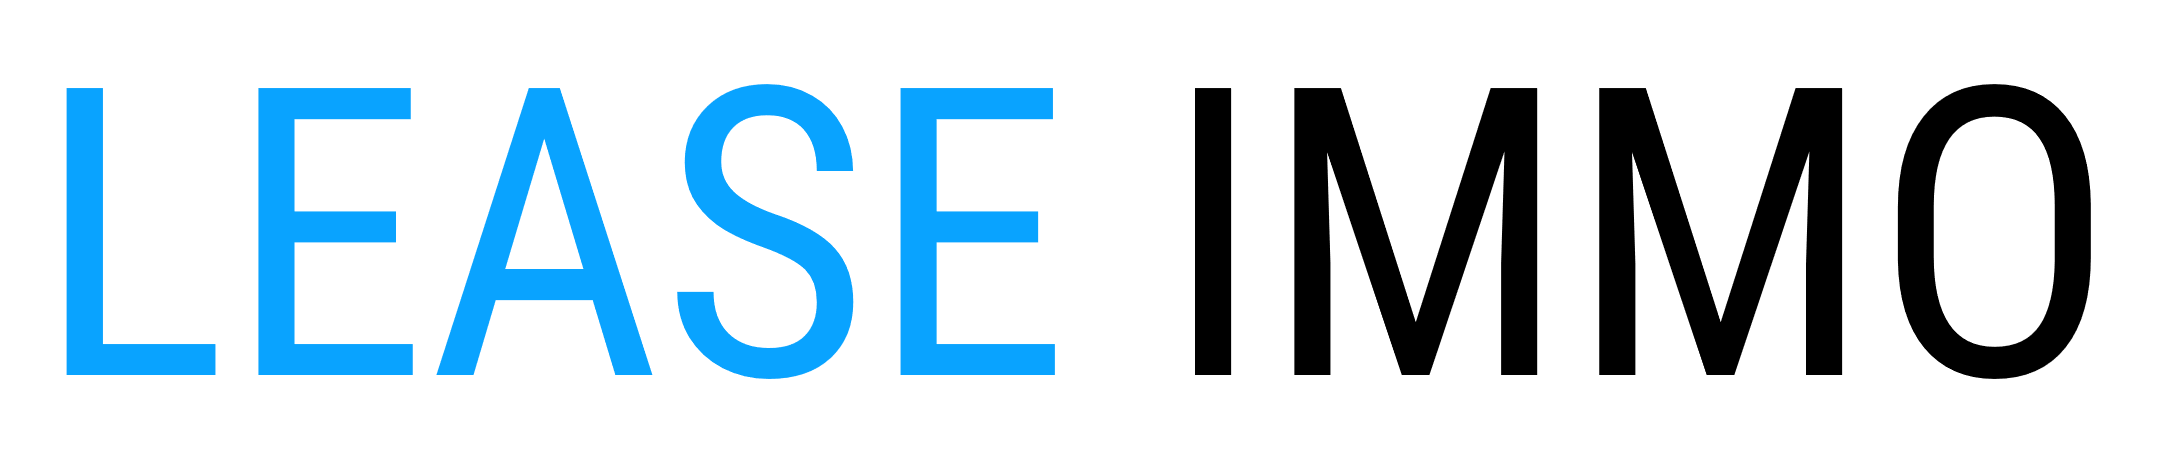 lease-logo-black